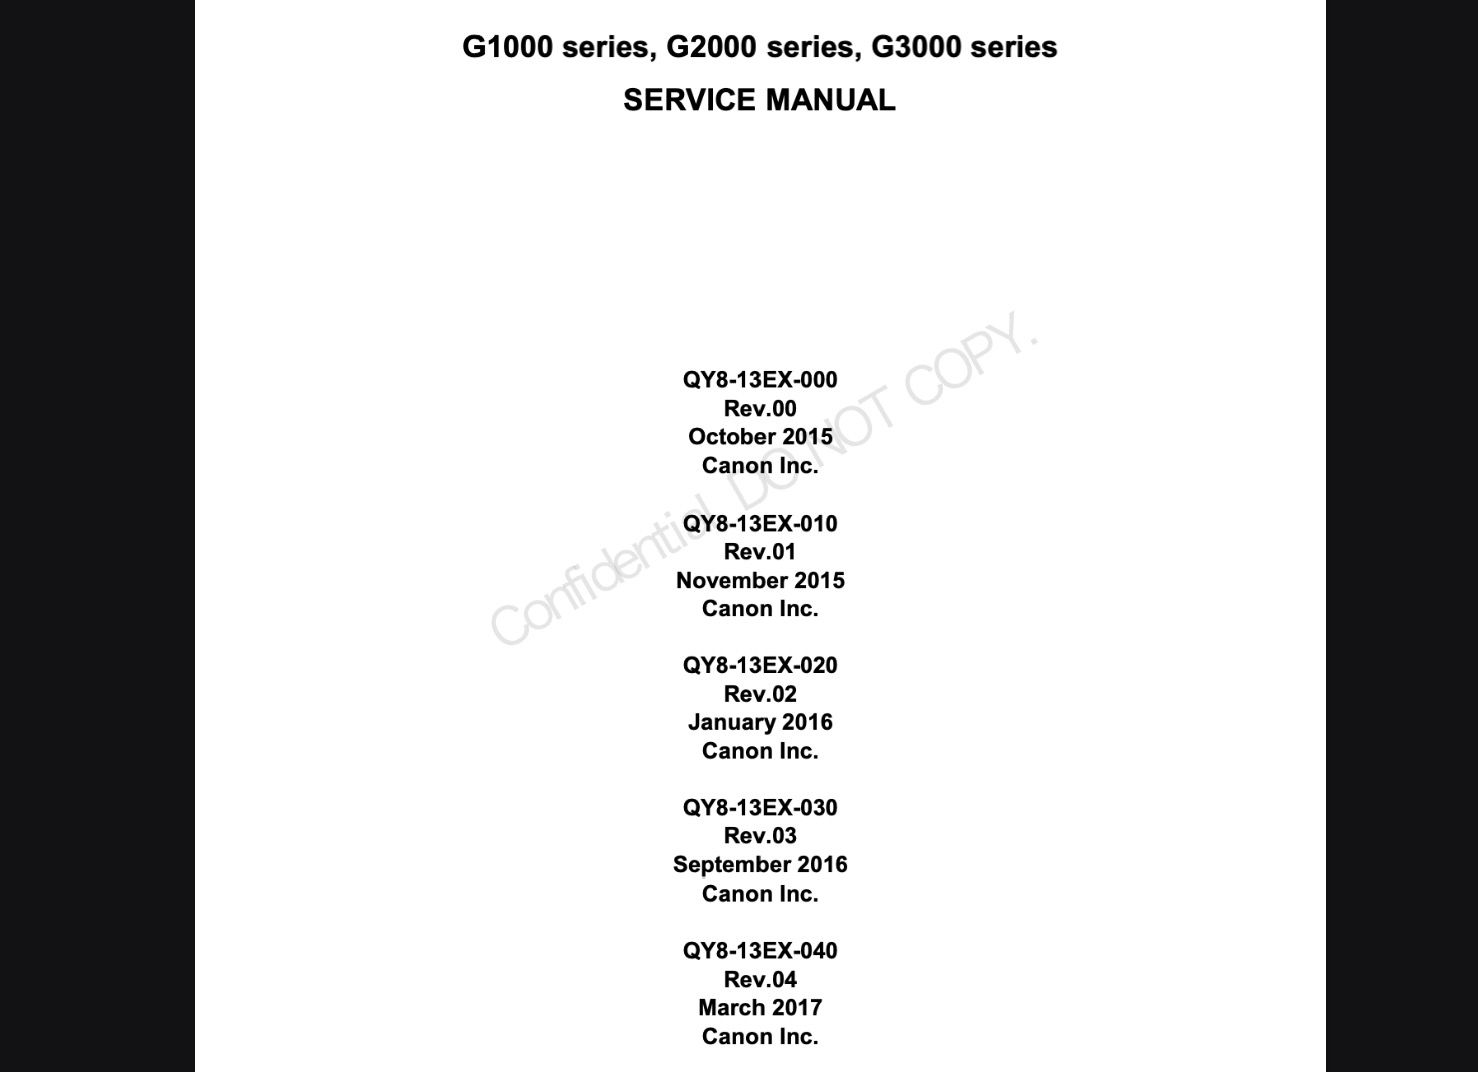 CANON G1000 Series, G2000 Series, G3000 Series printers Service Manual